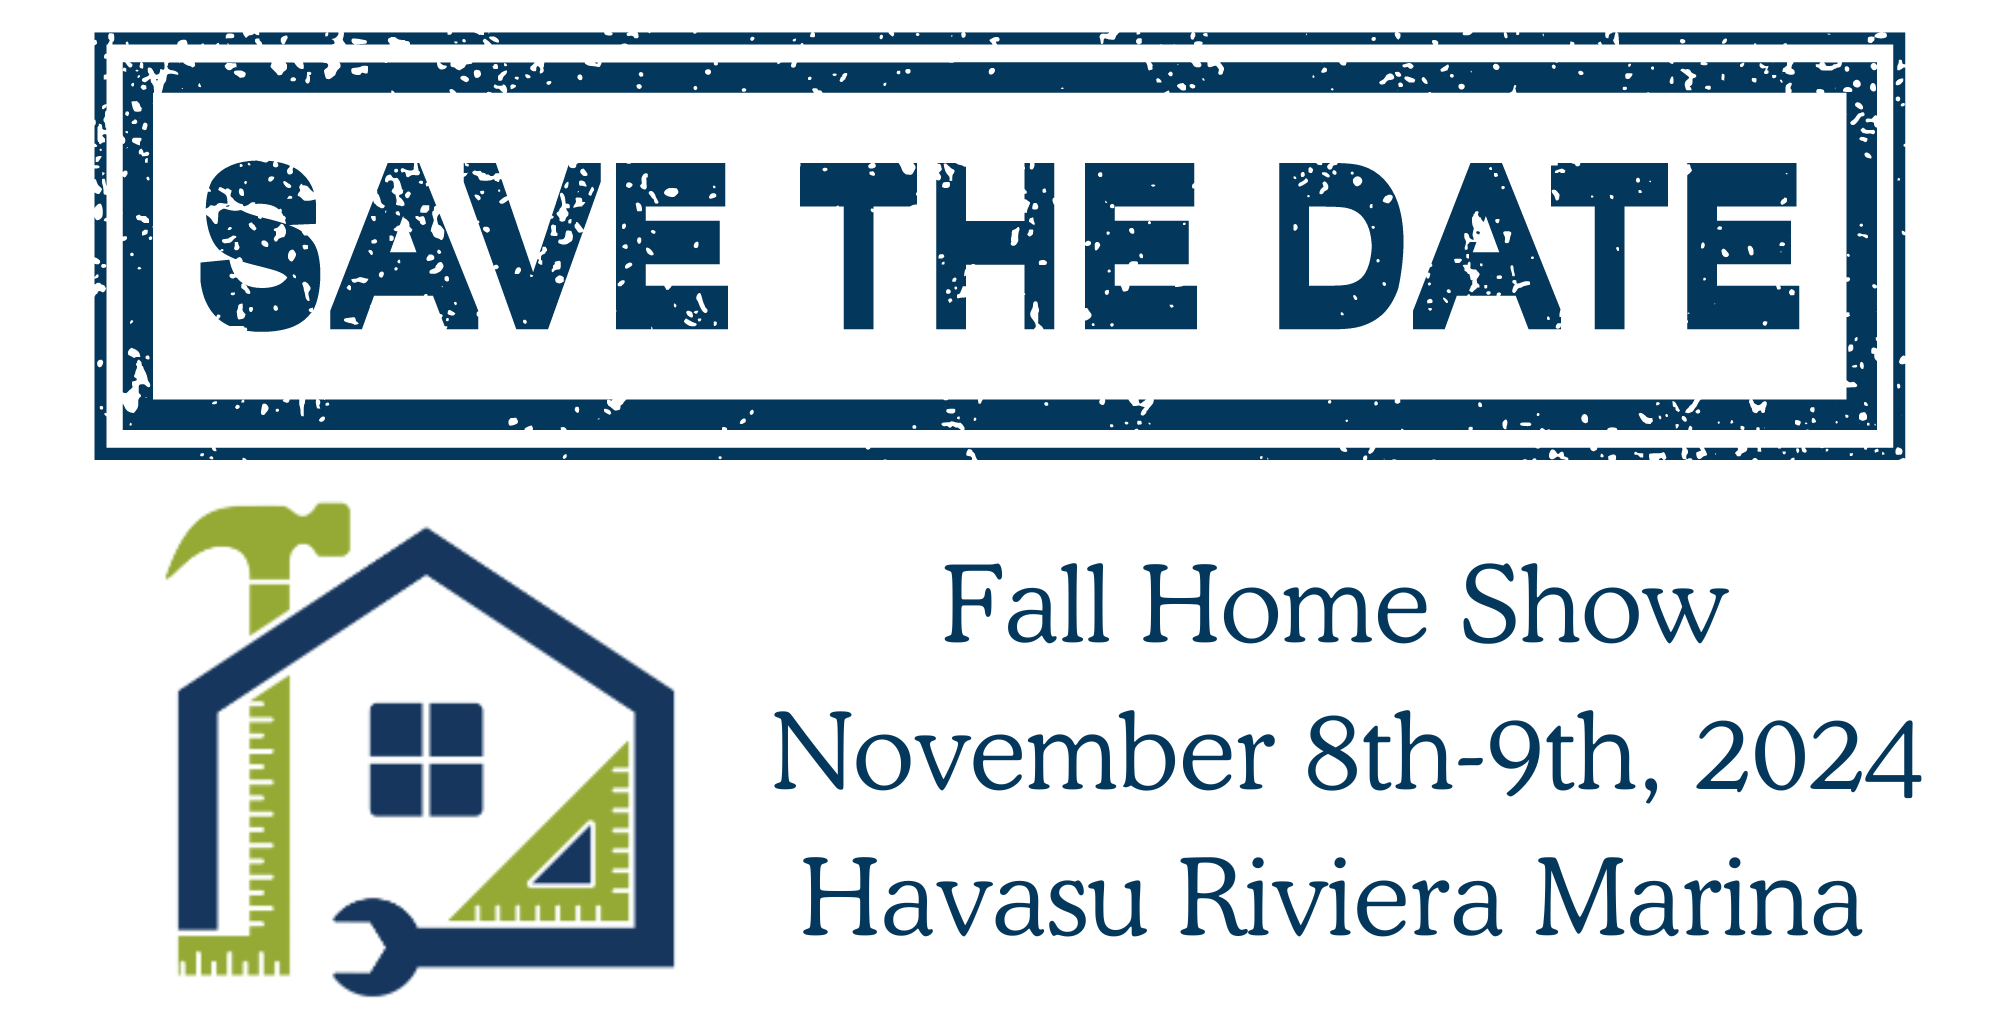 Fall Home Show November 8th-9th, 2024 Havasu Riviera Marina